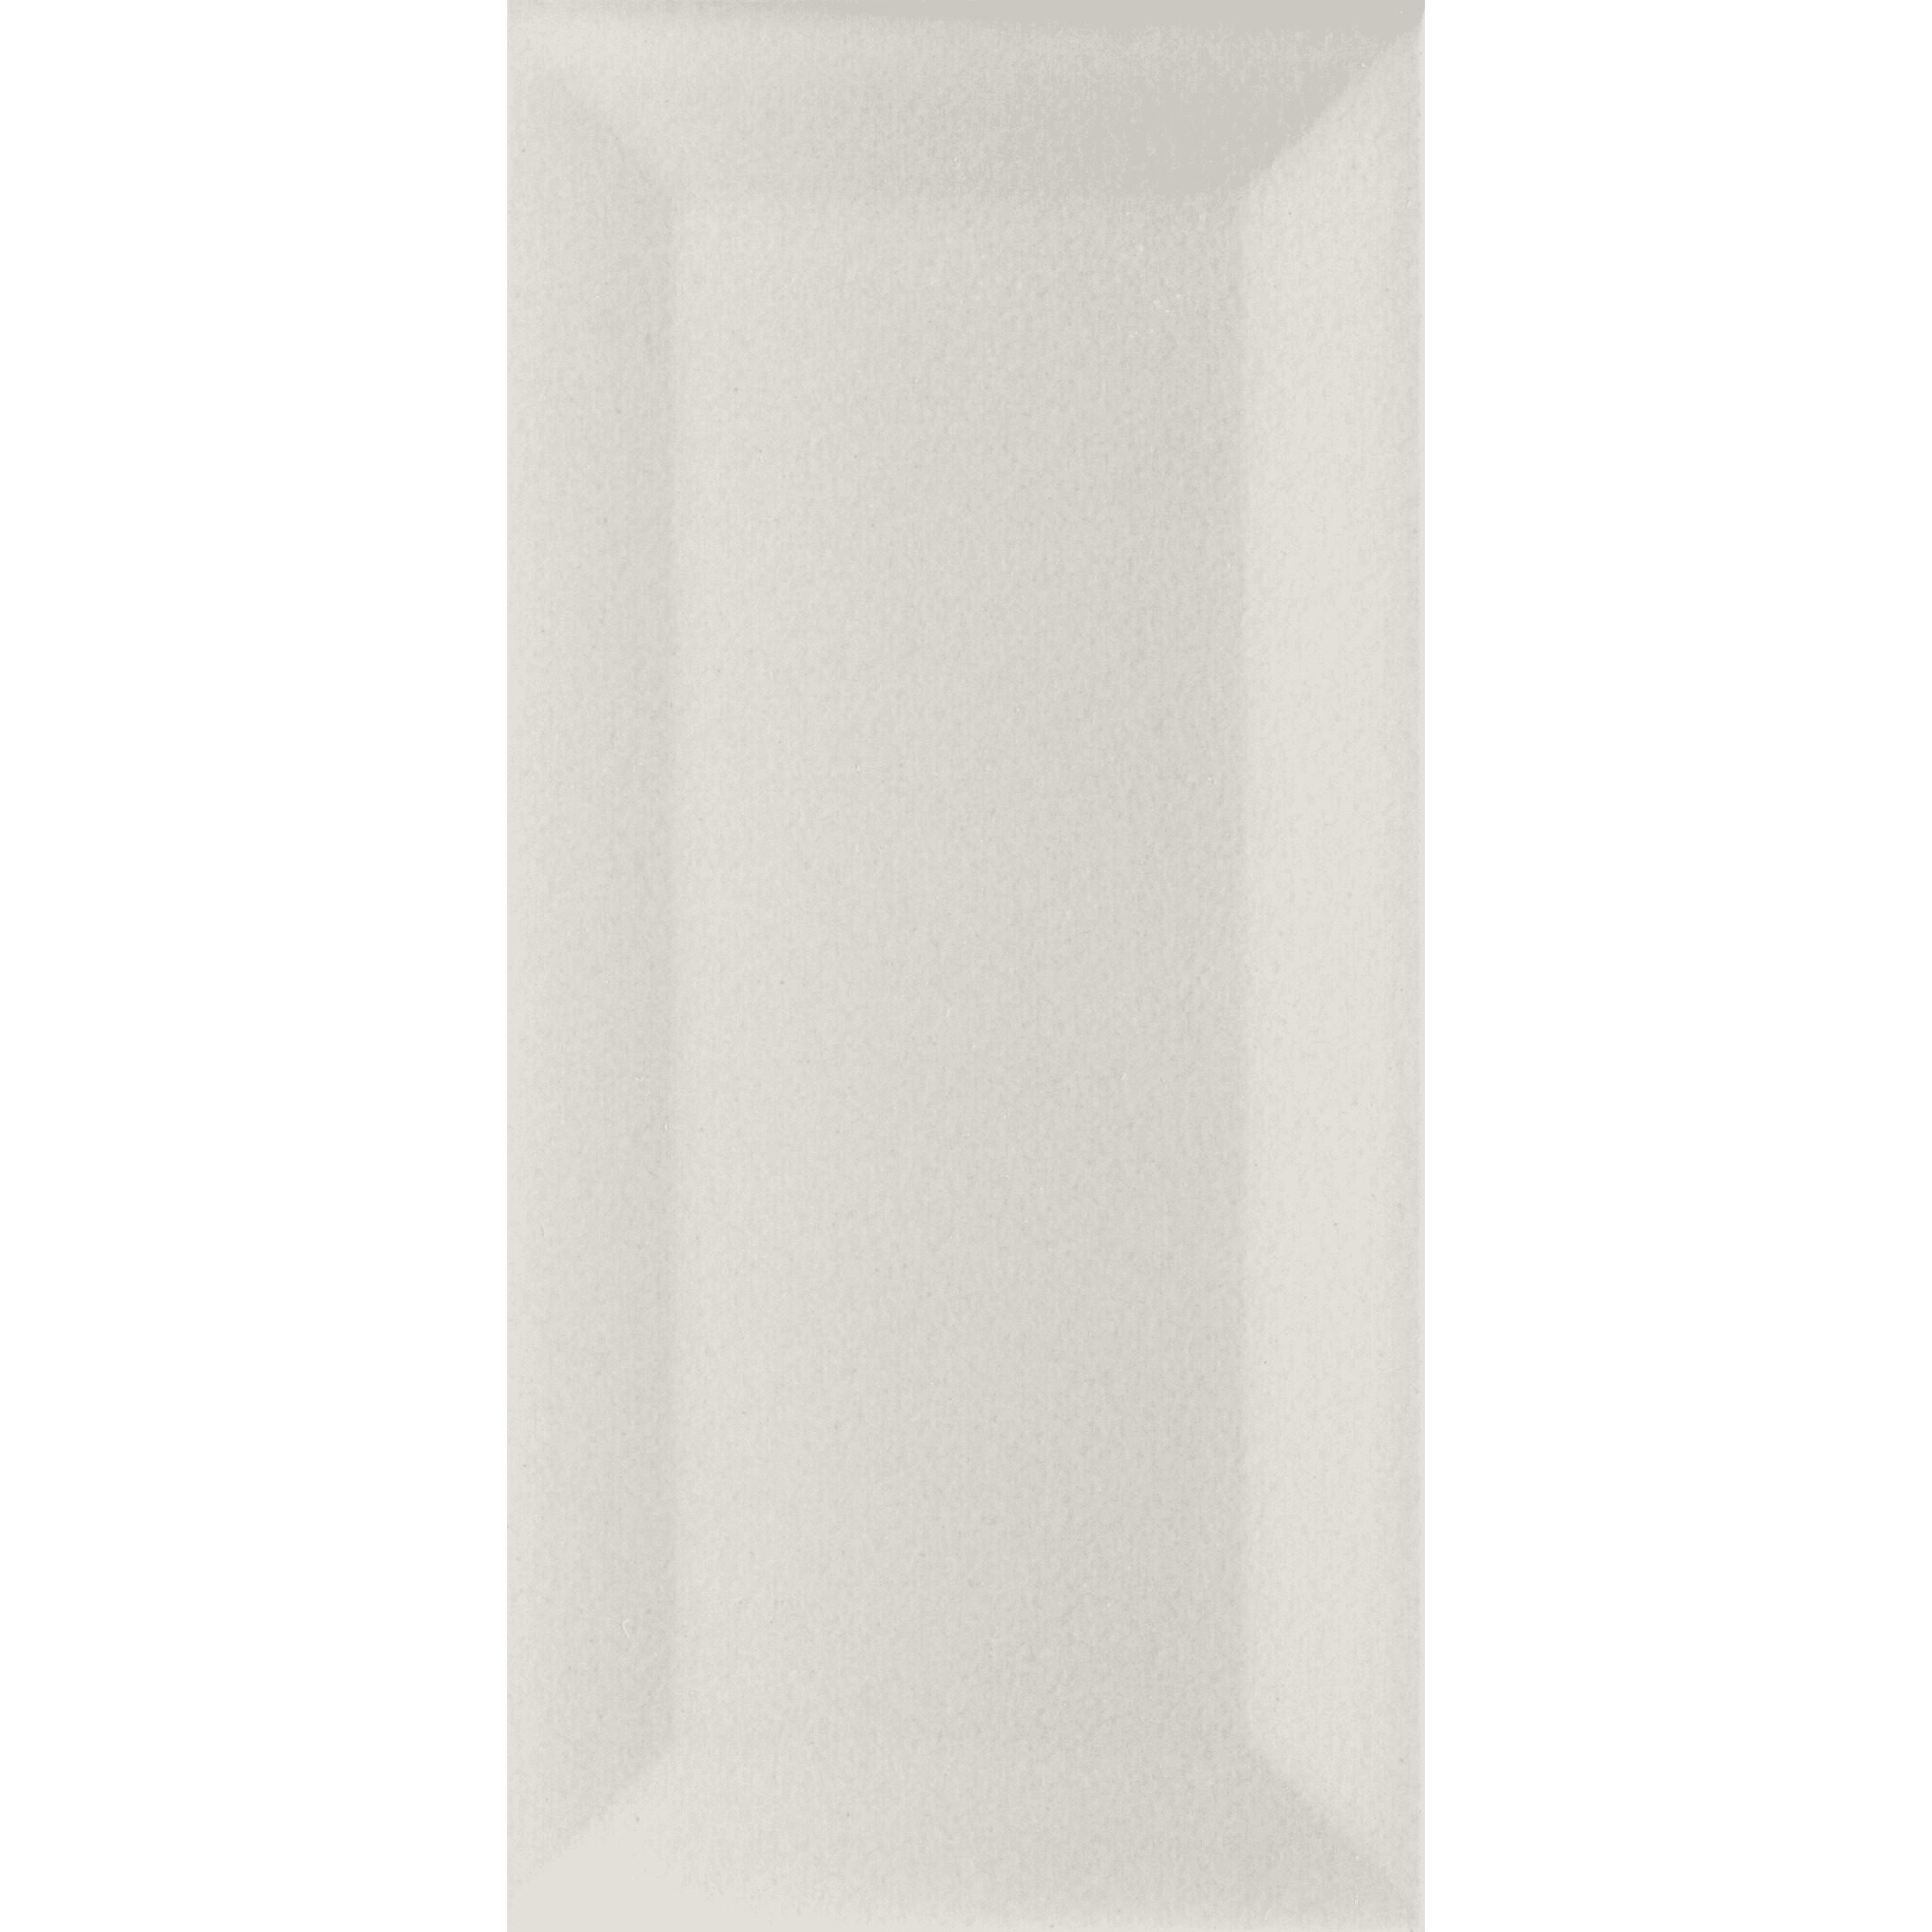 фото Плитка облицовочная corsa deco soft brick белая 200x95x7,5 мм (54 шт.=1,126 кв.м)